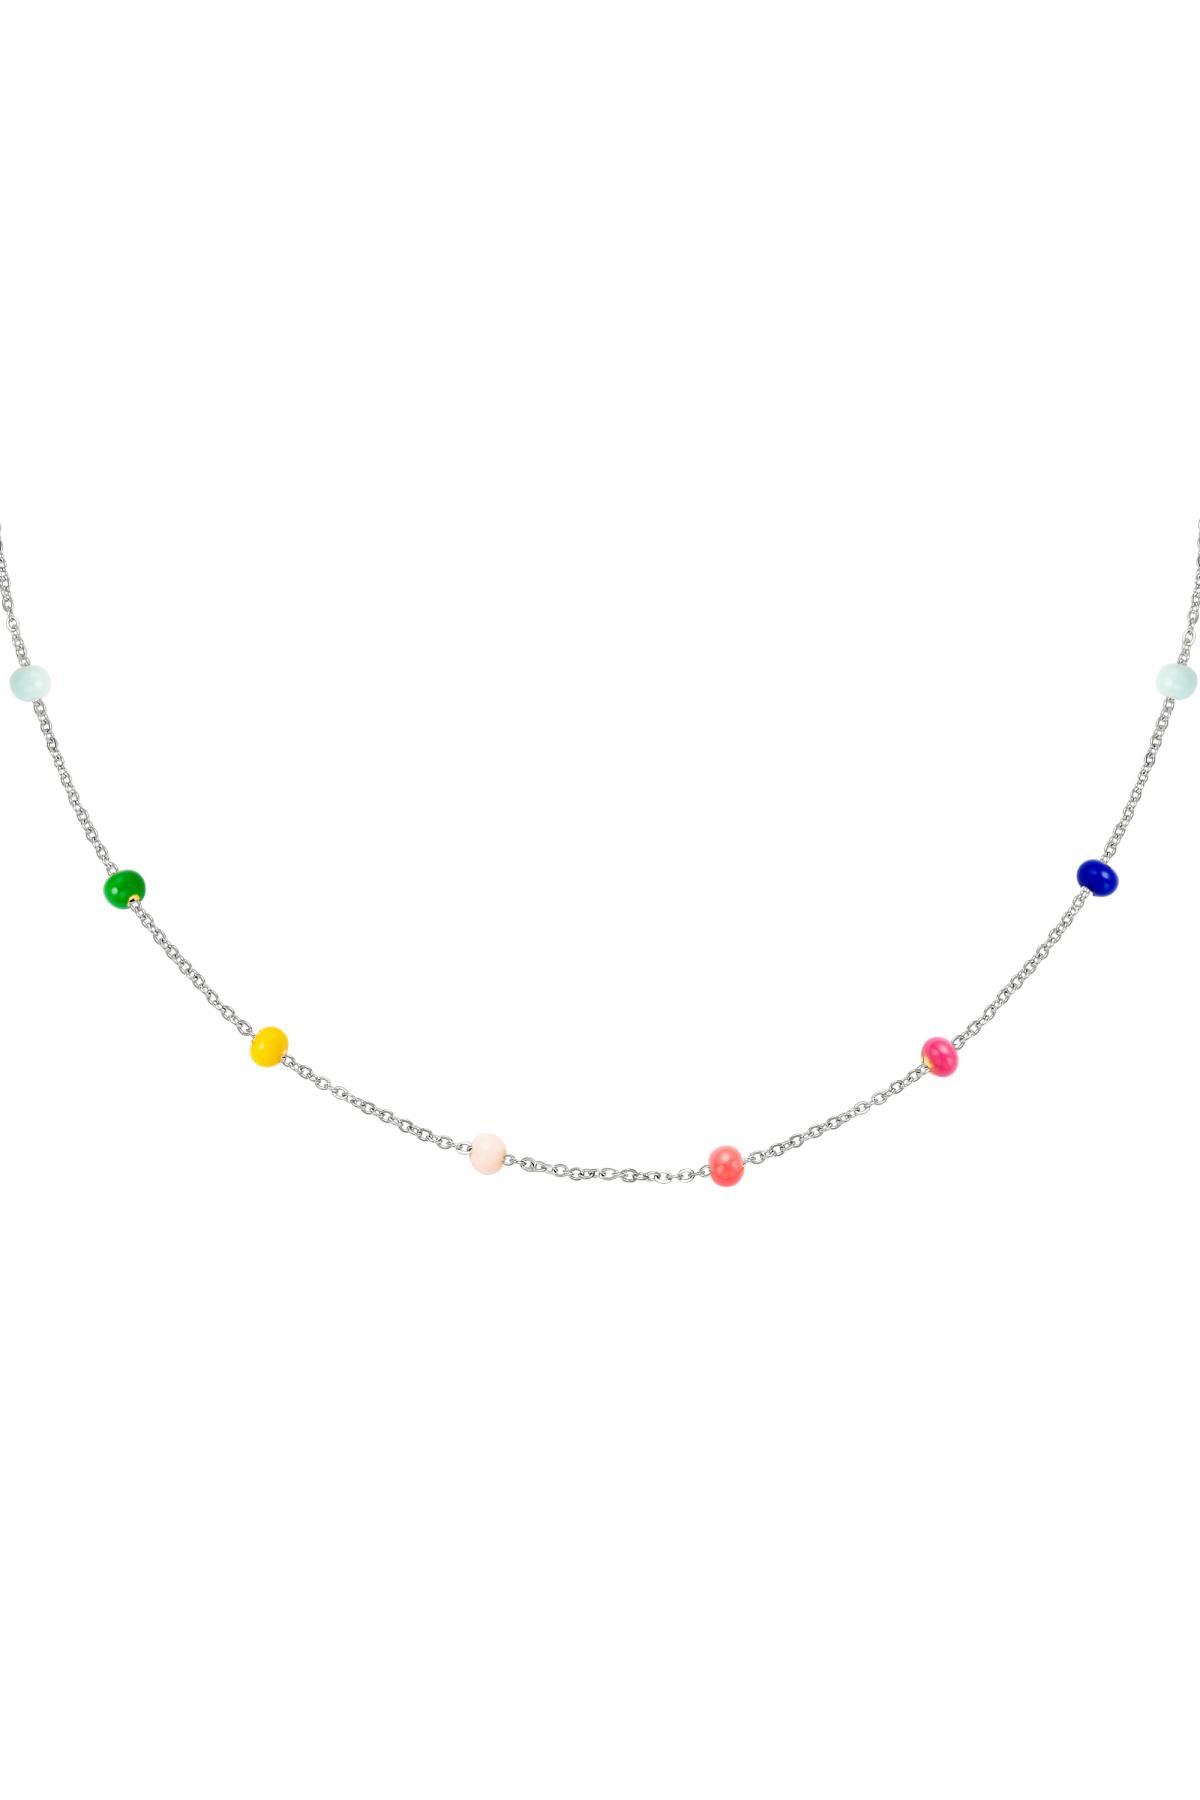 Halskette farbige Perlen Silber Edelstahl h5 